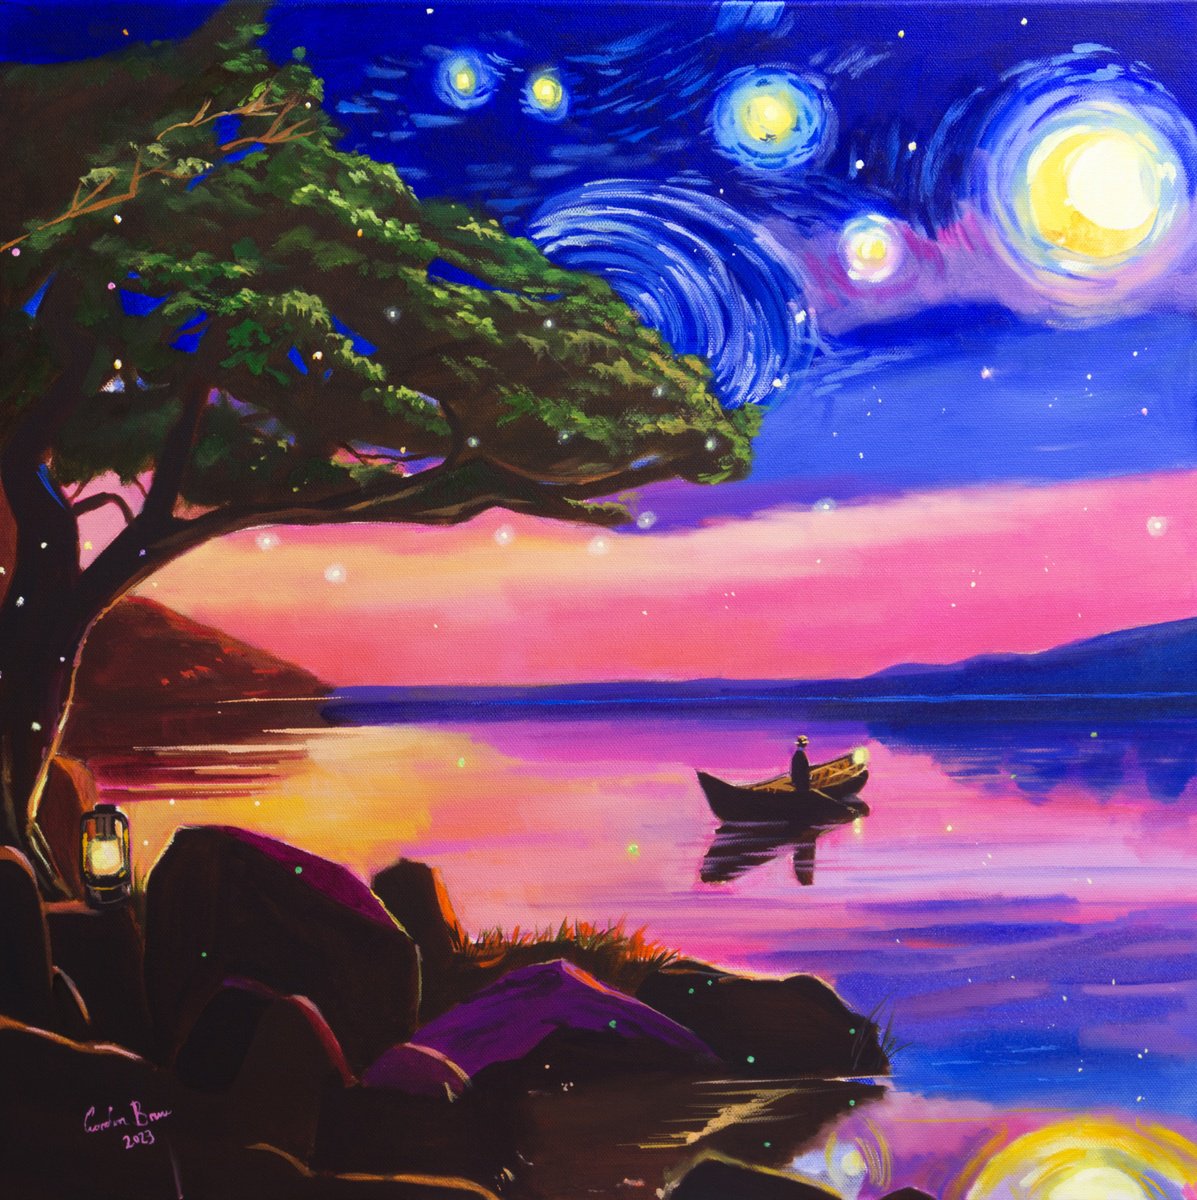 Van Gogh Starry Night at the lake by Gordon Bruce